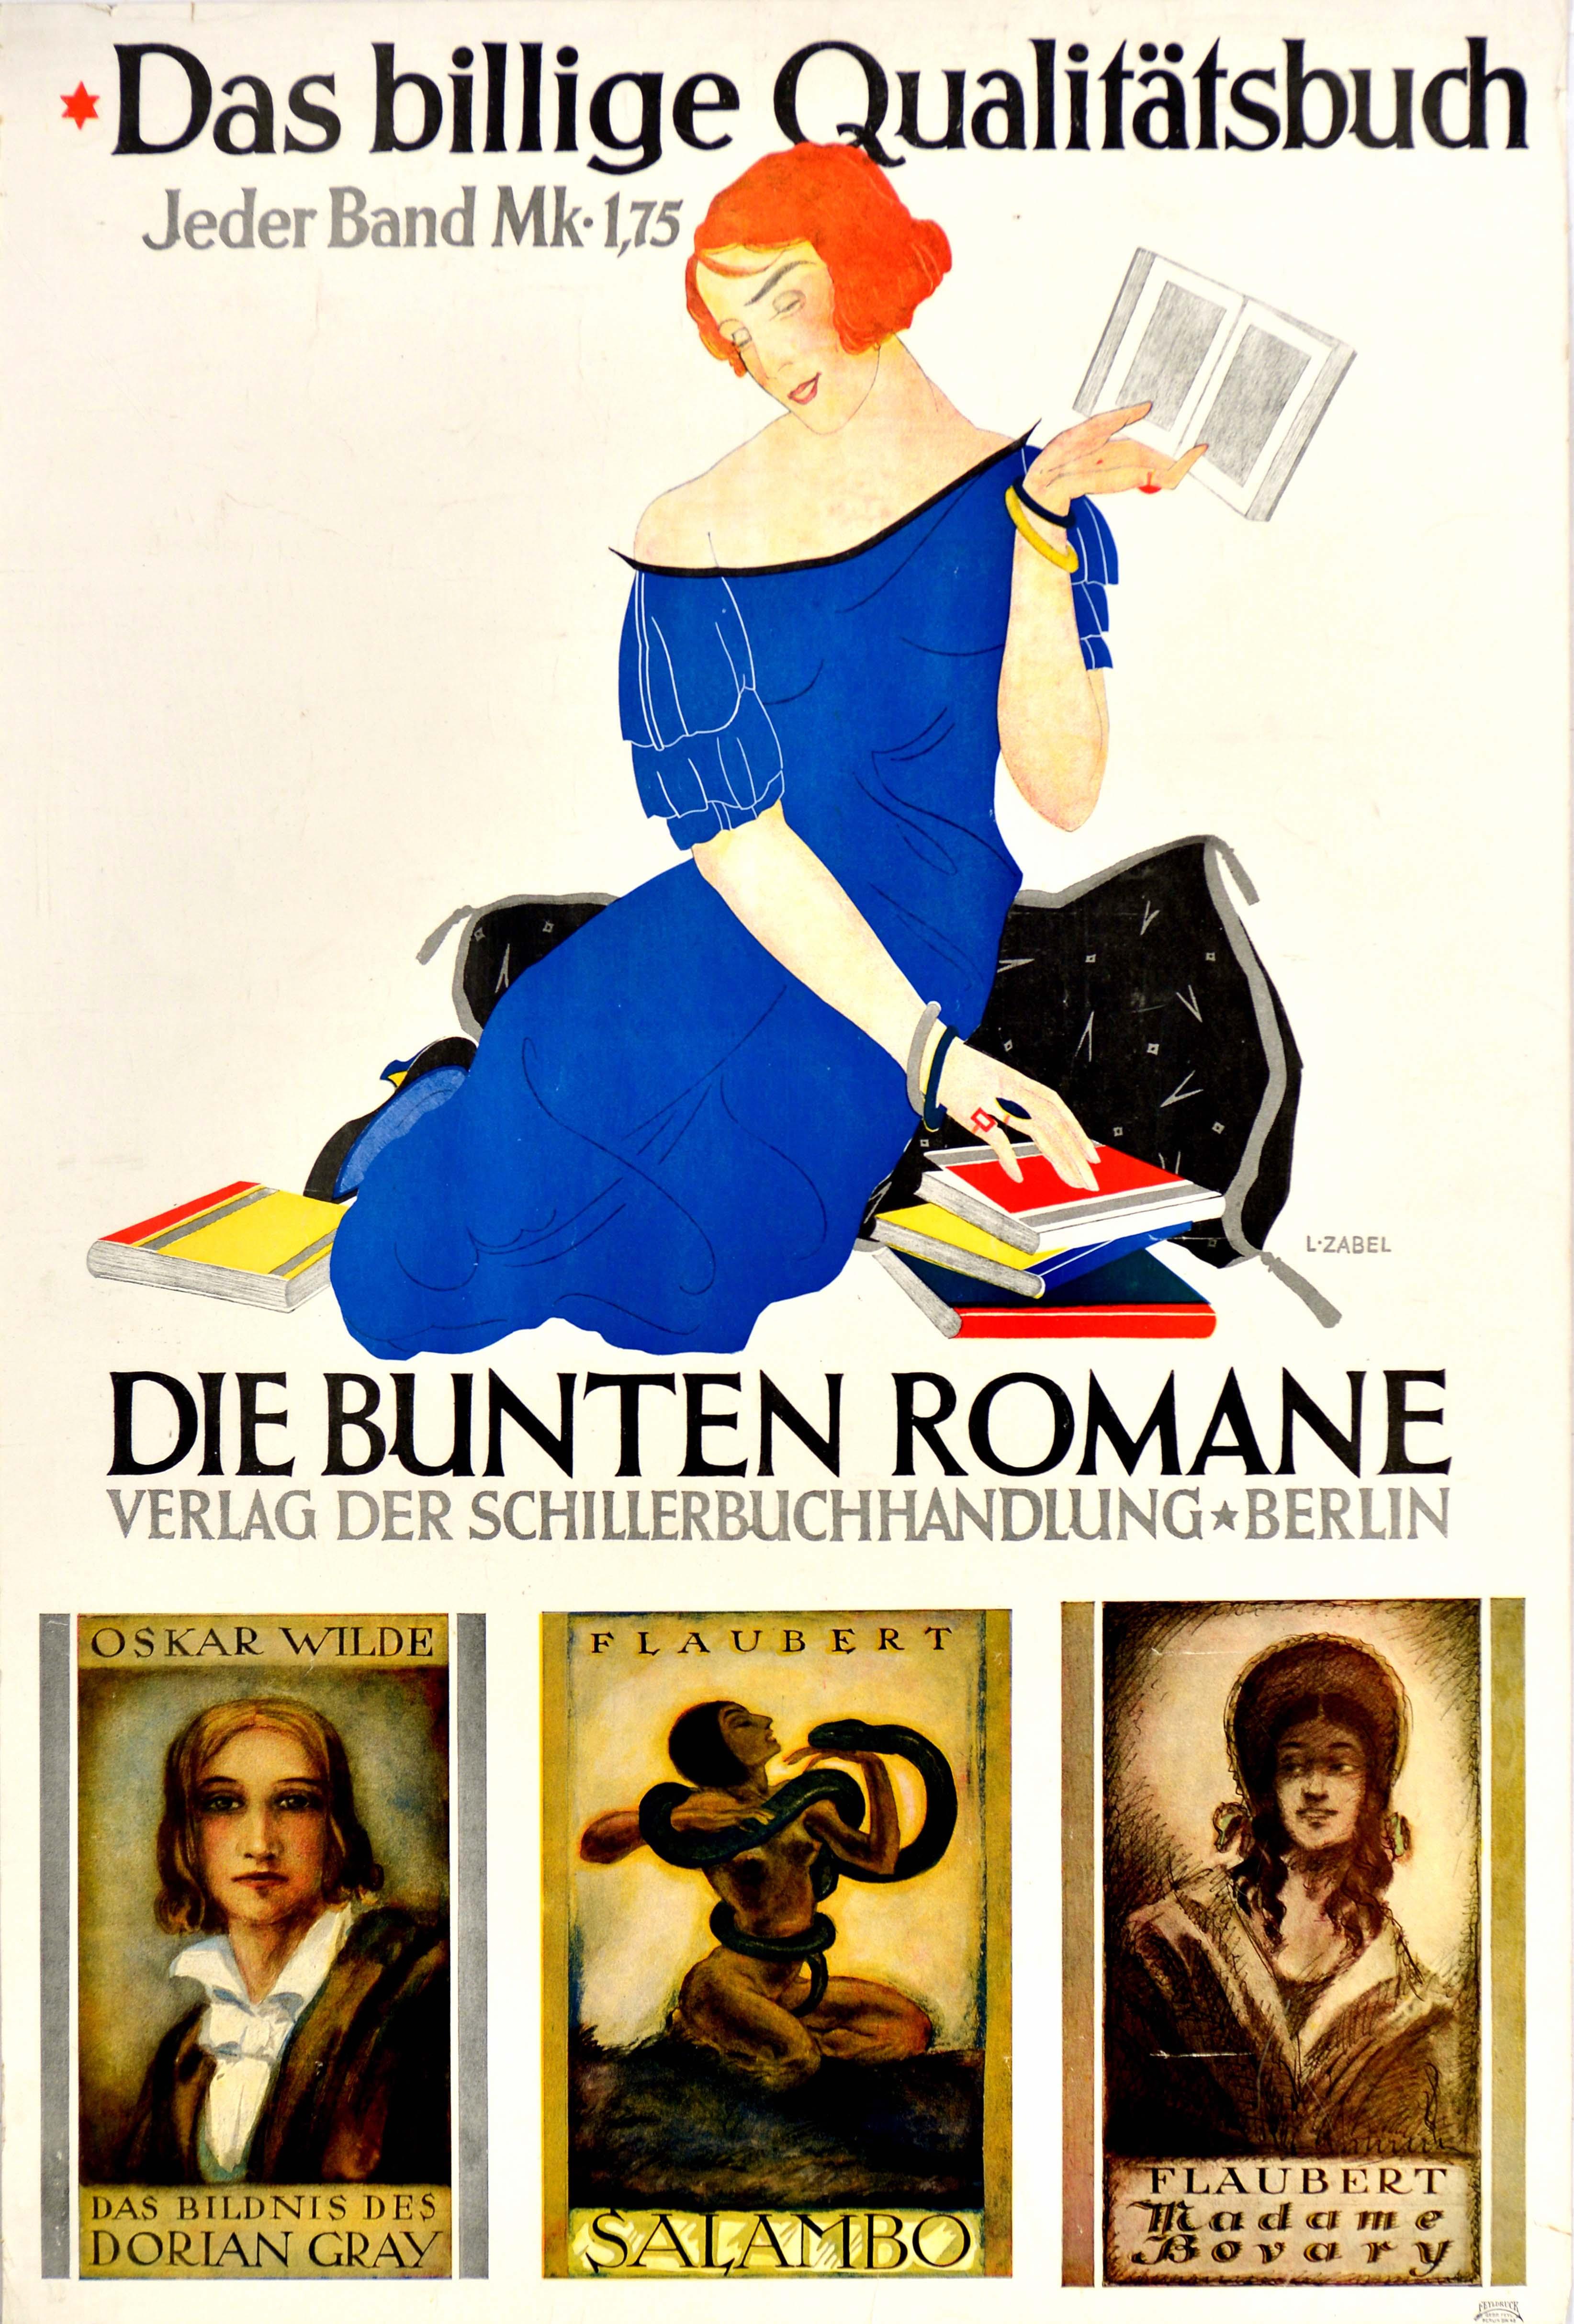 L. Zabel Print - Original Vintage Posters Quality Books Oscar Wilde Gustave Flaubert Roman Bucher